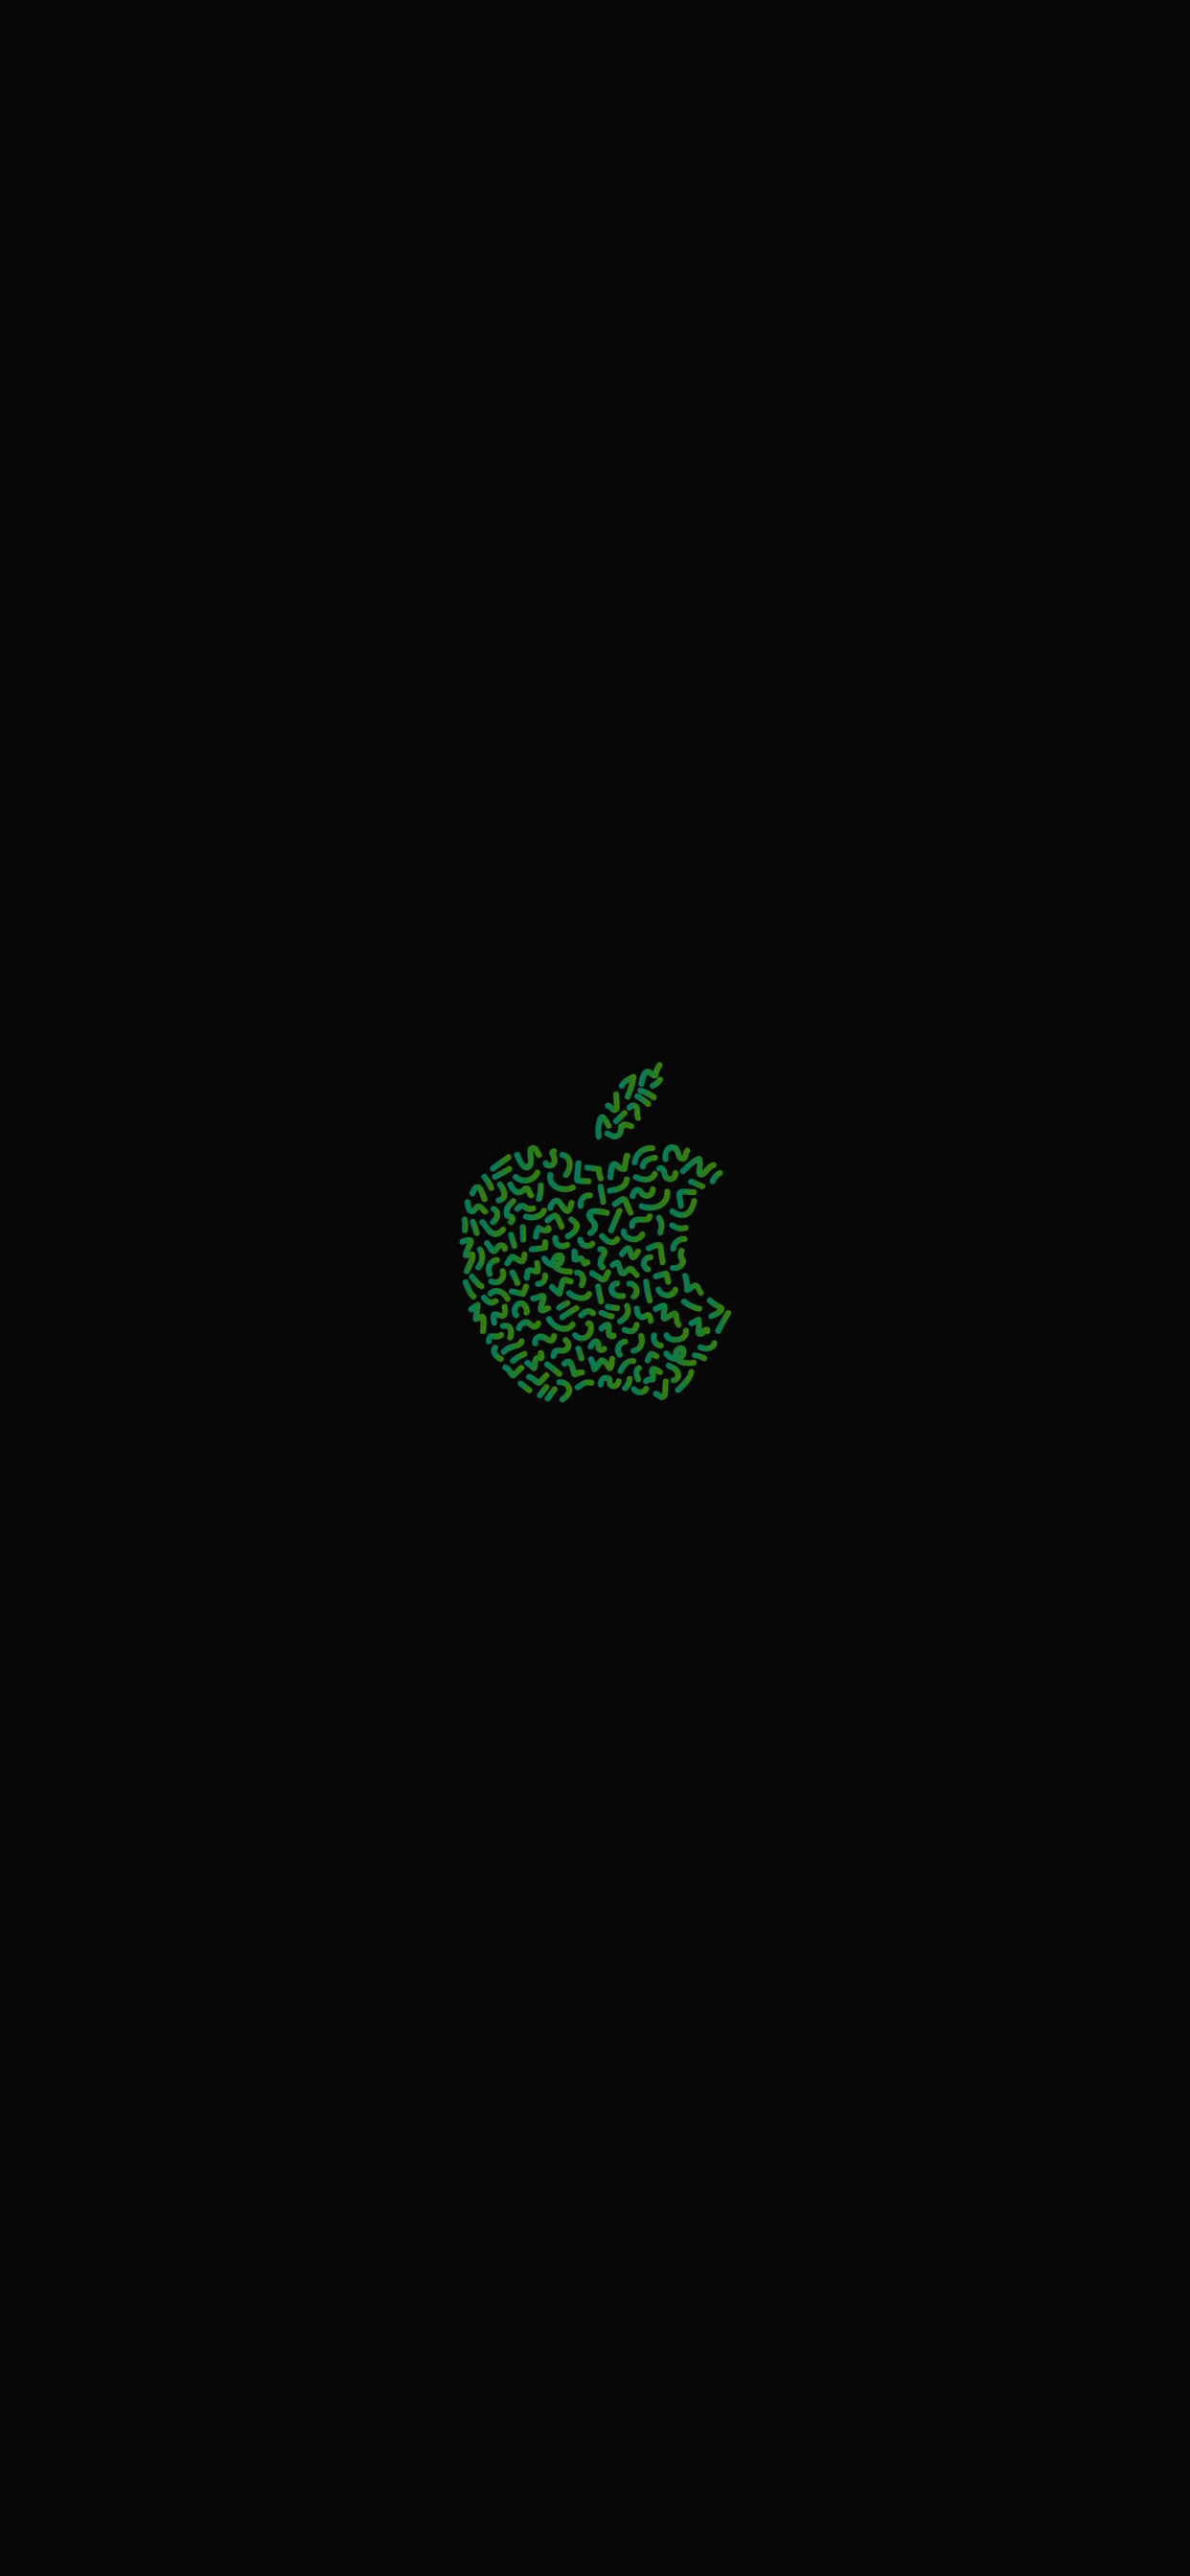 Обои 13 мини. Обои на айфон. Обои на айфон 13 мини. Зеленое яблоко на черном фоне. Обои на айфон 13 зеленые.